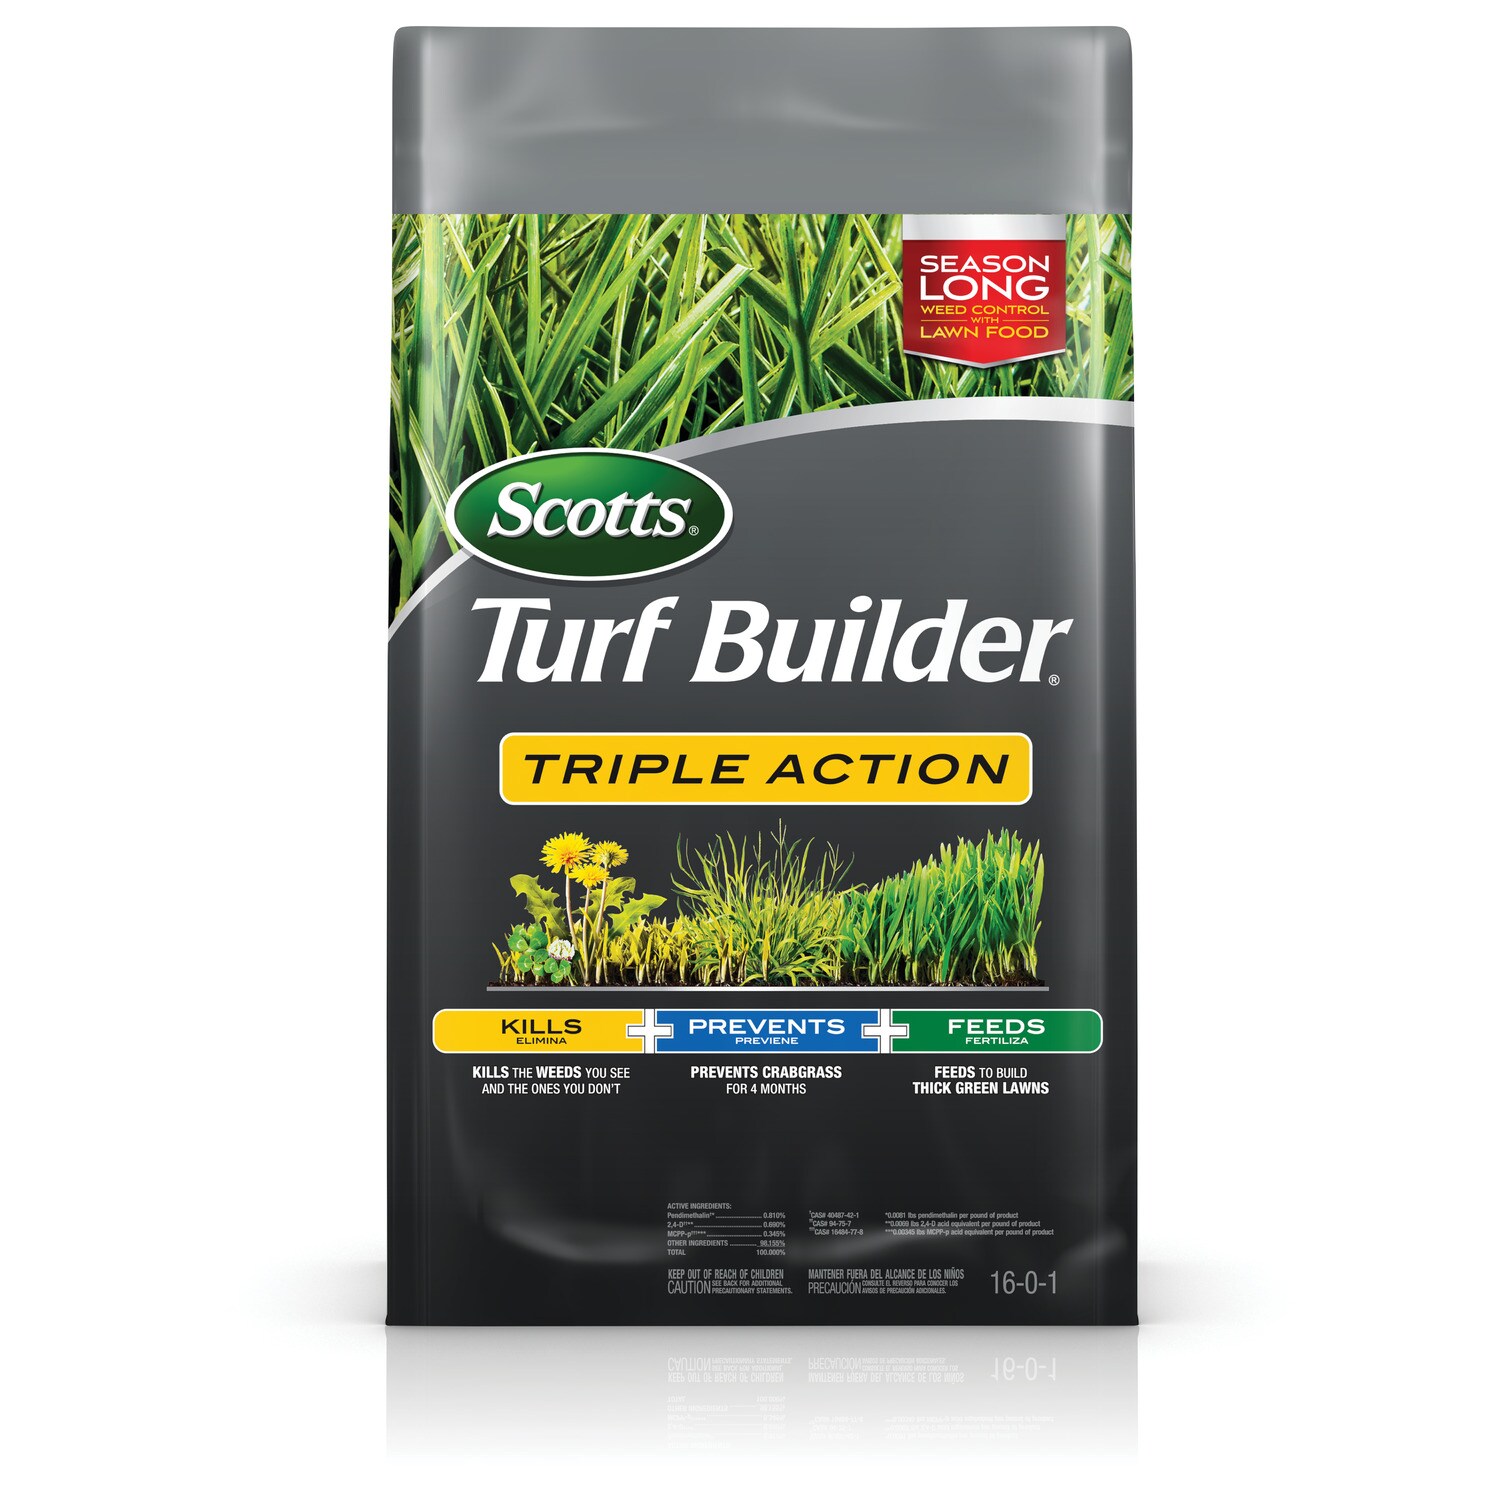 Scotts 20lb Turf Builder Triple Action Weeds killer Prevents Crabgrass Fertilize 